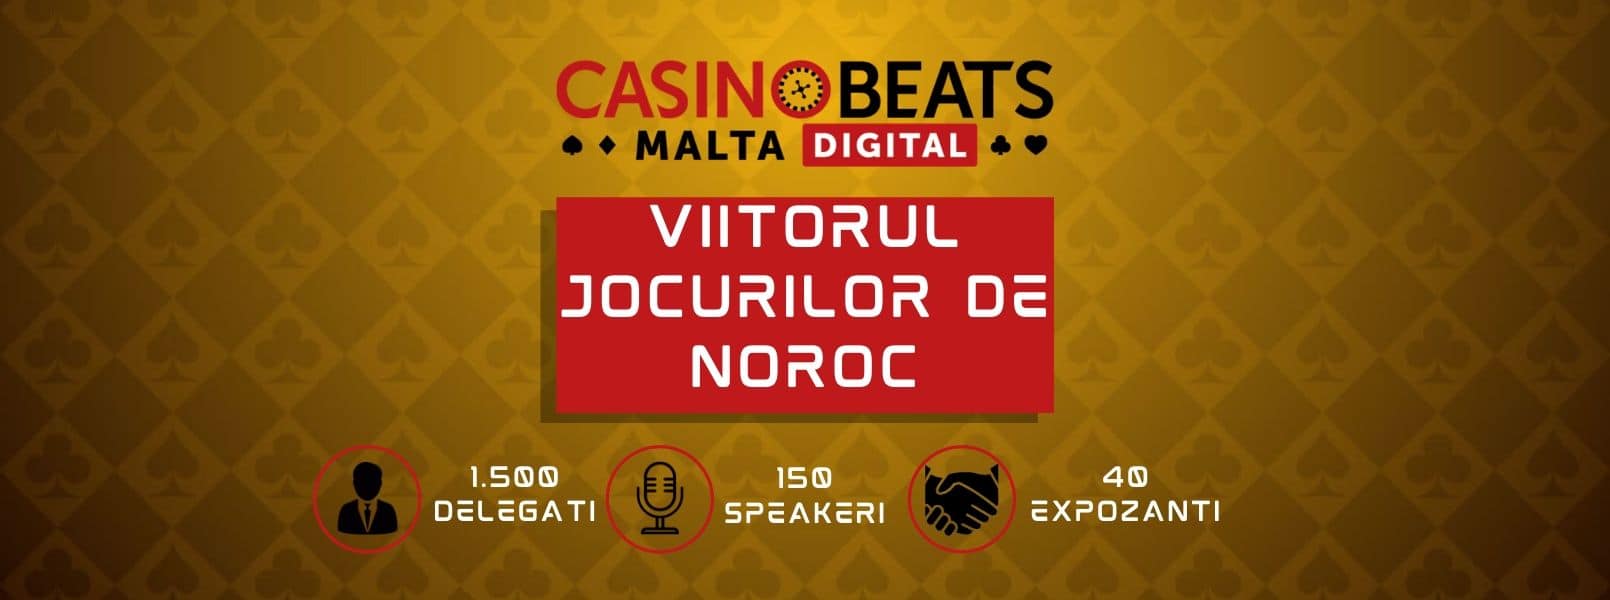 csaino beats malta digital